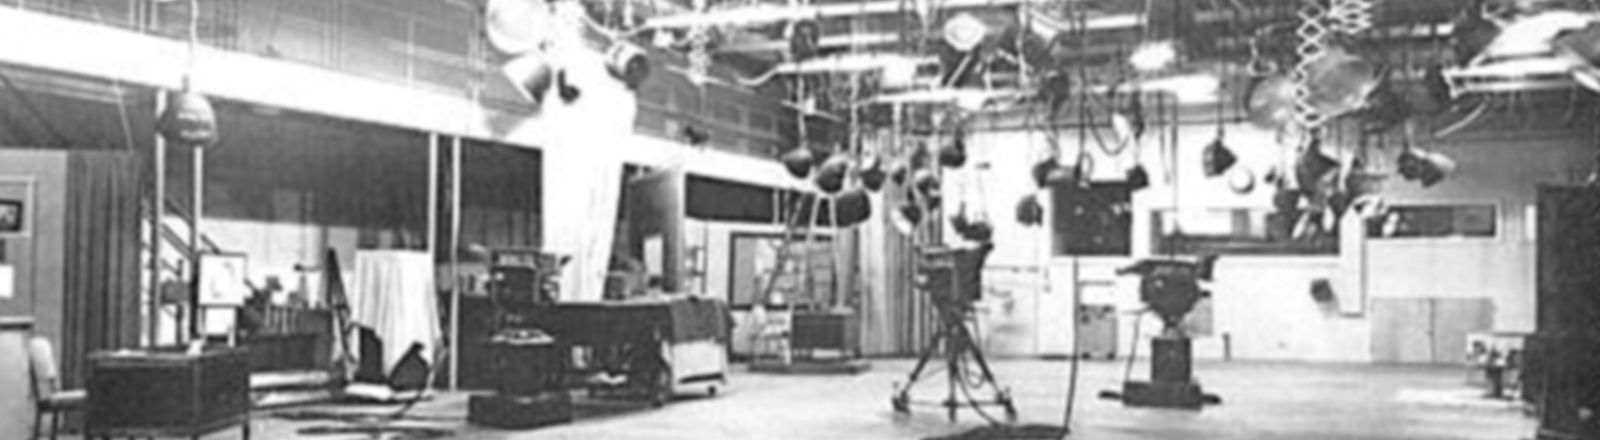 Vintage image of WWL TV Studio